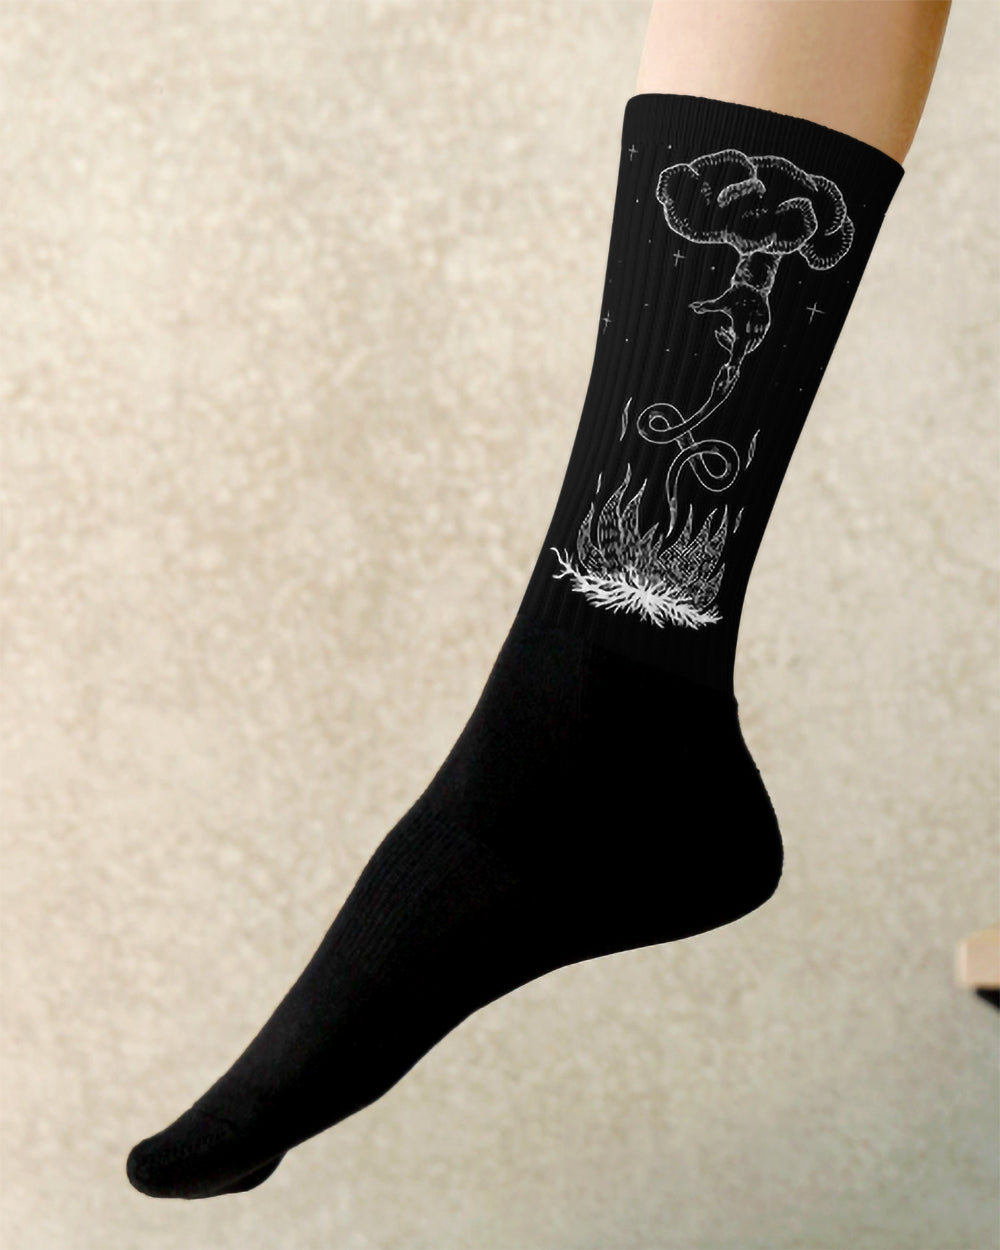 Godbane Socks: Ethical Witchy Fashion, Goth Accessories for Dark Acade + Wolf